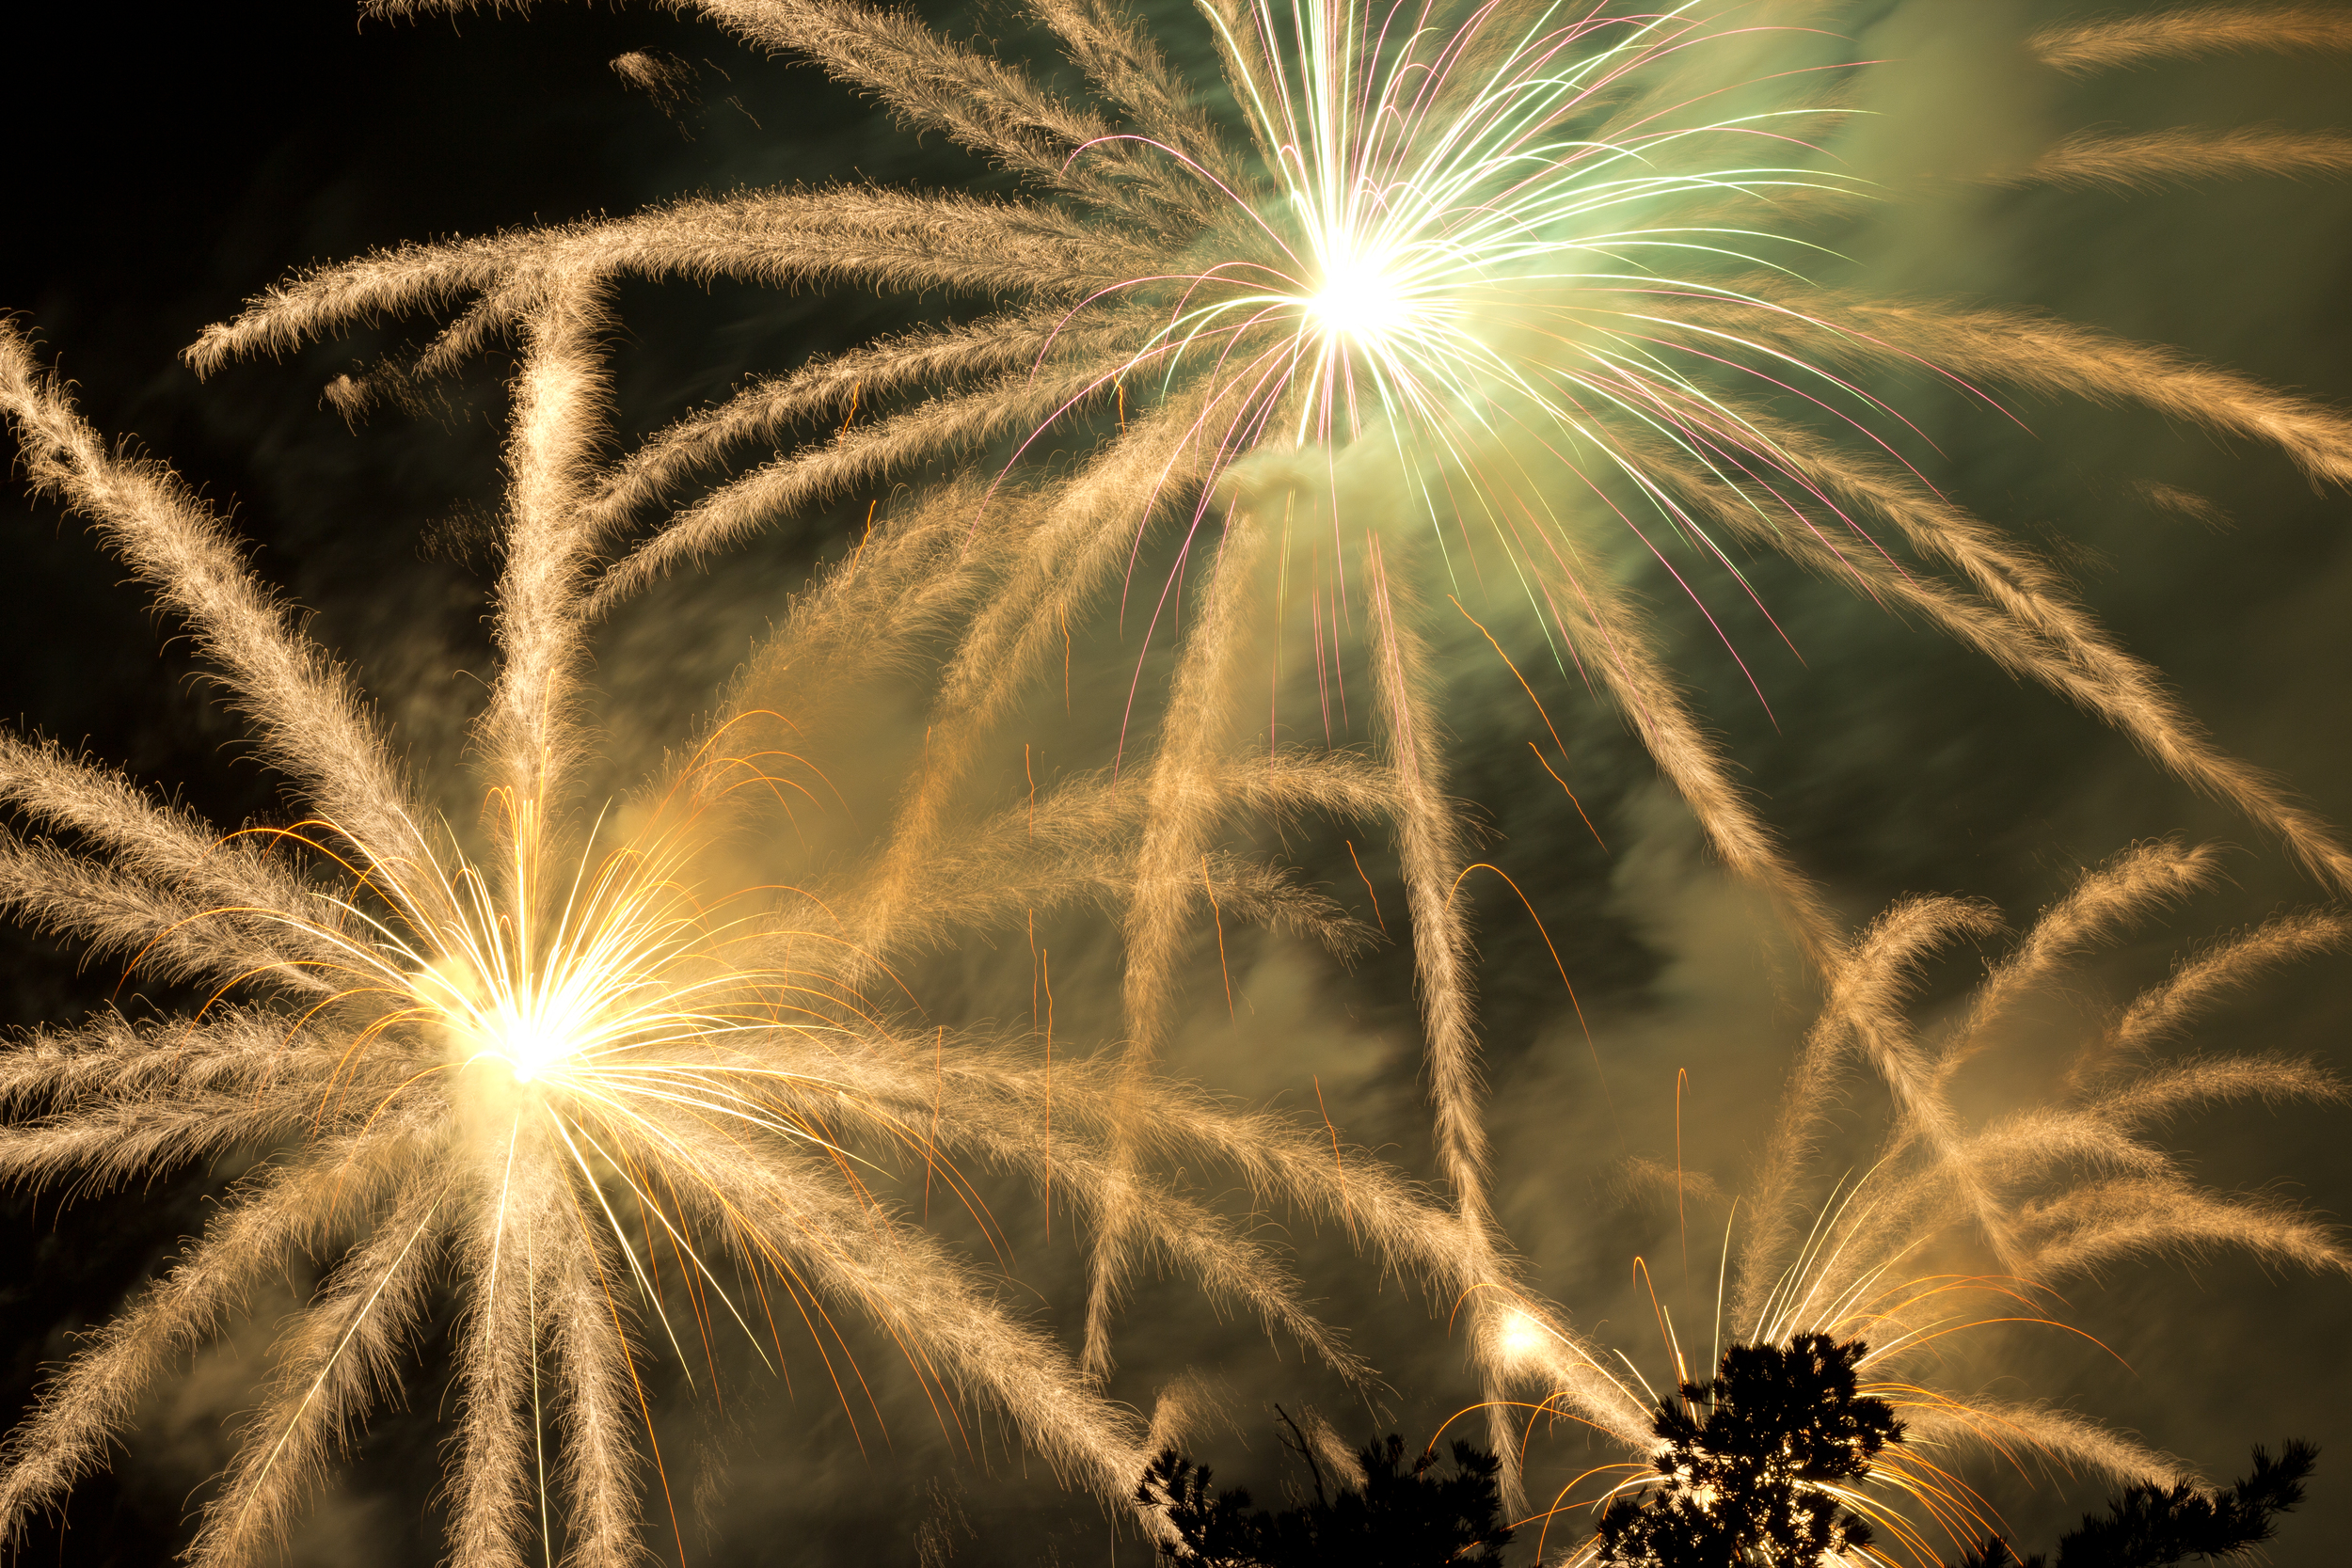 Fireworks Rose Bowl Rollie Robles.jpg